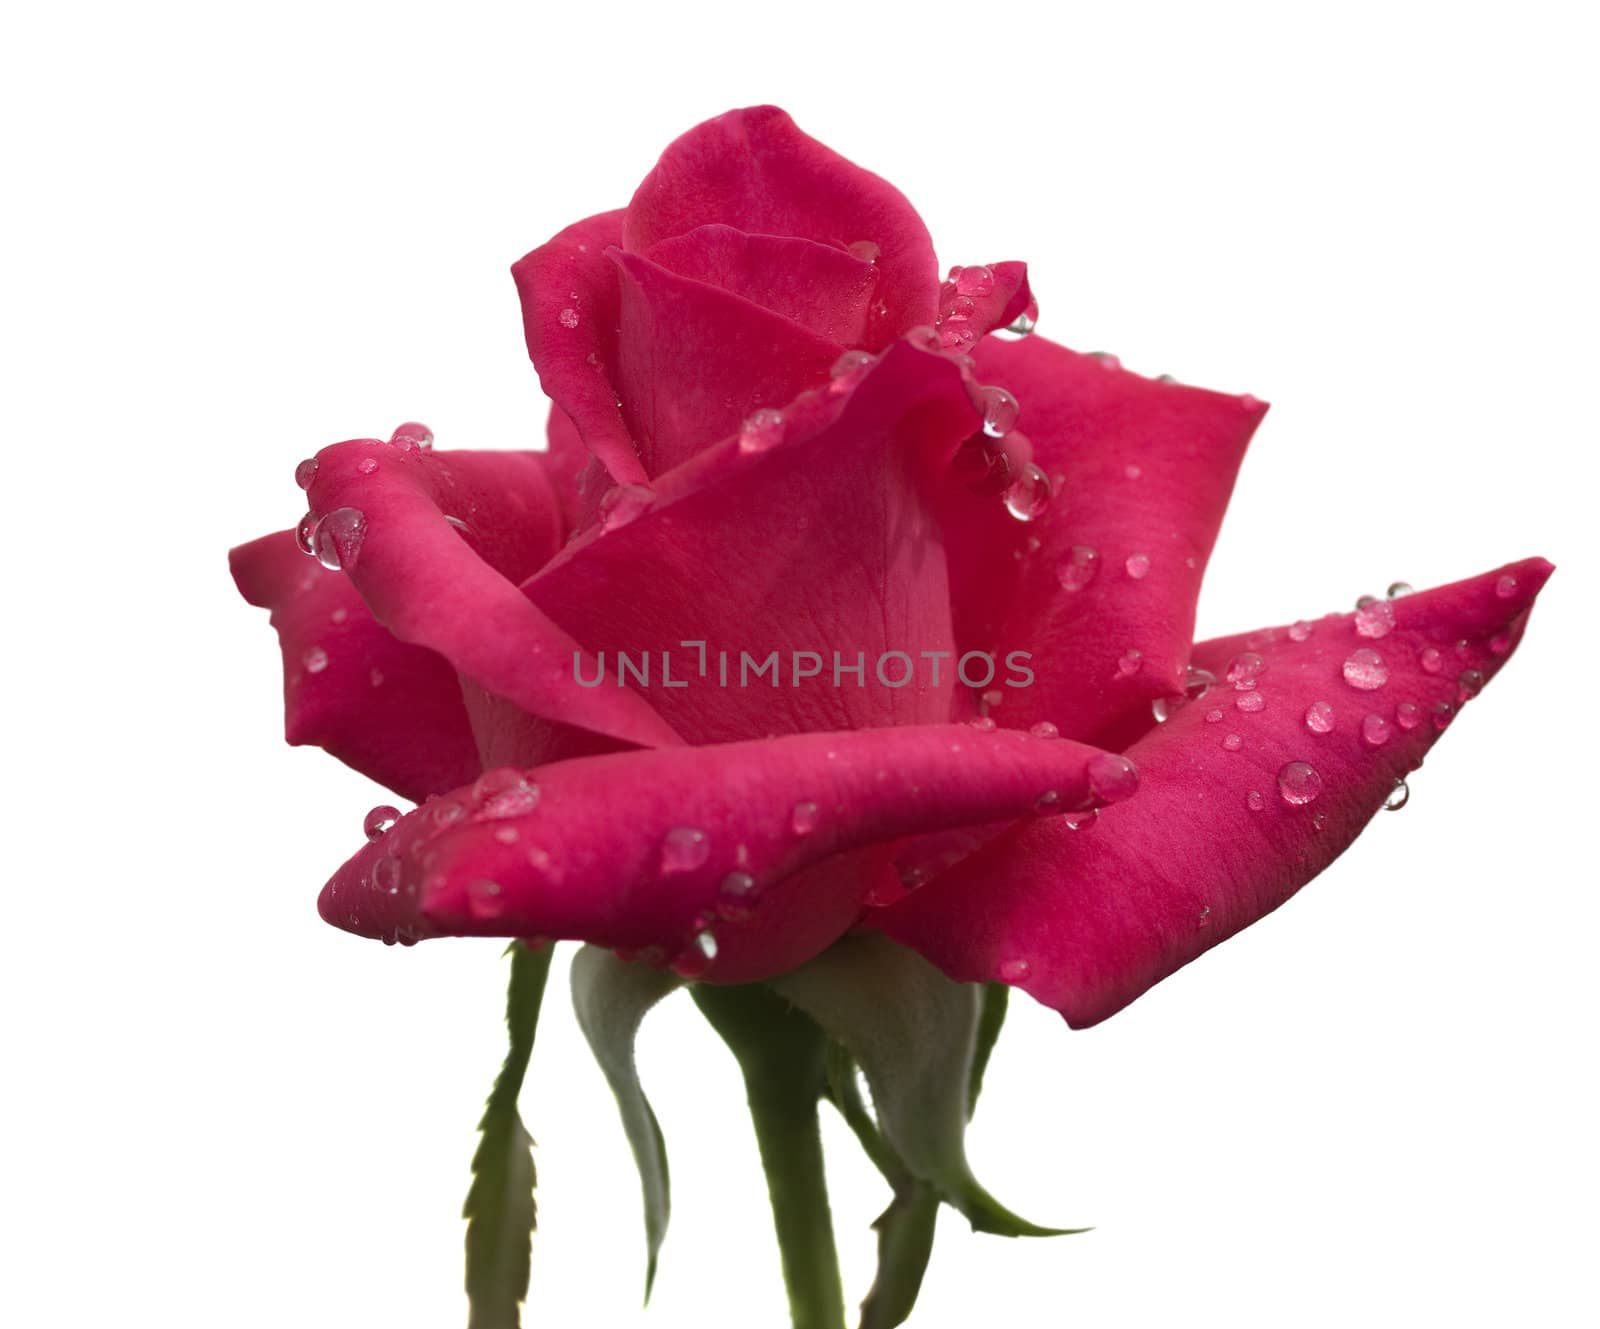 raindrops on cerise red rose flower stem on white by sherj